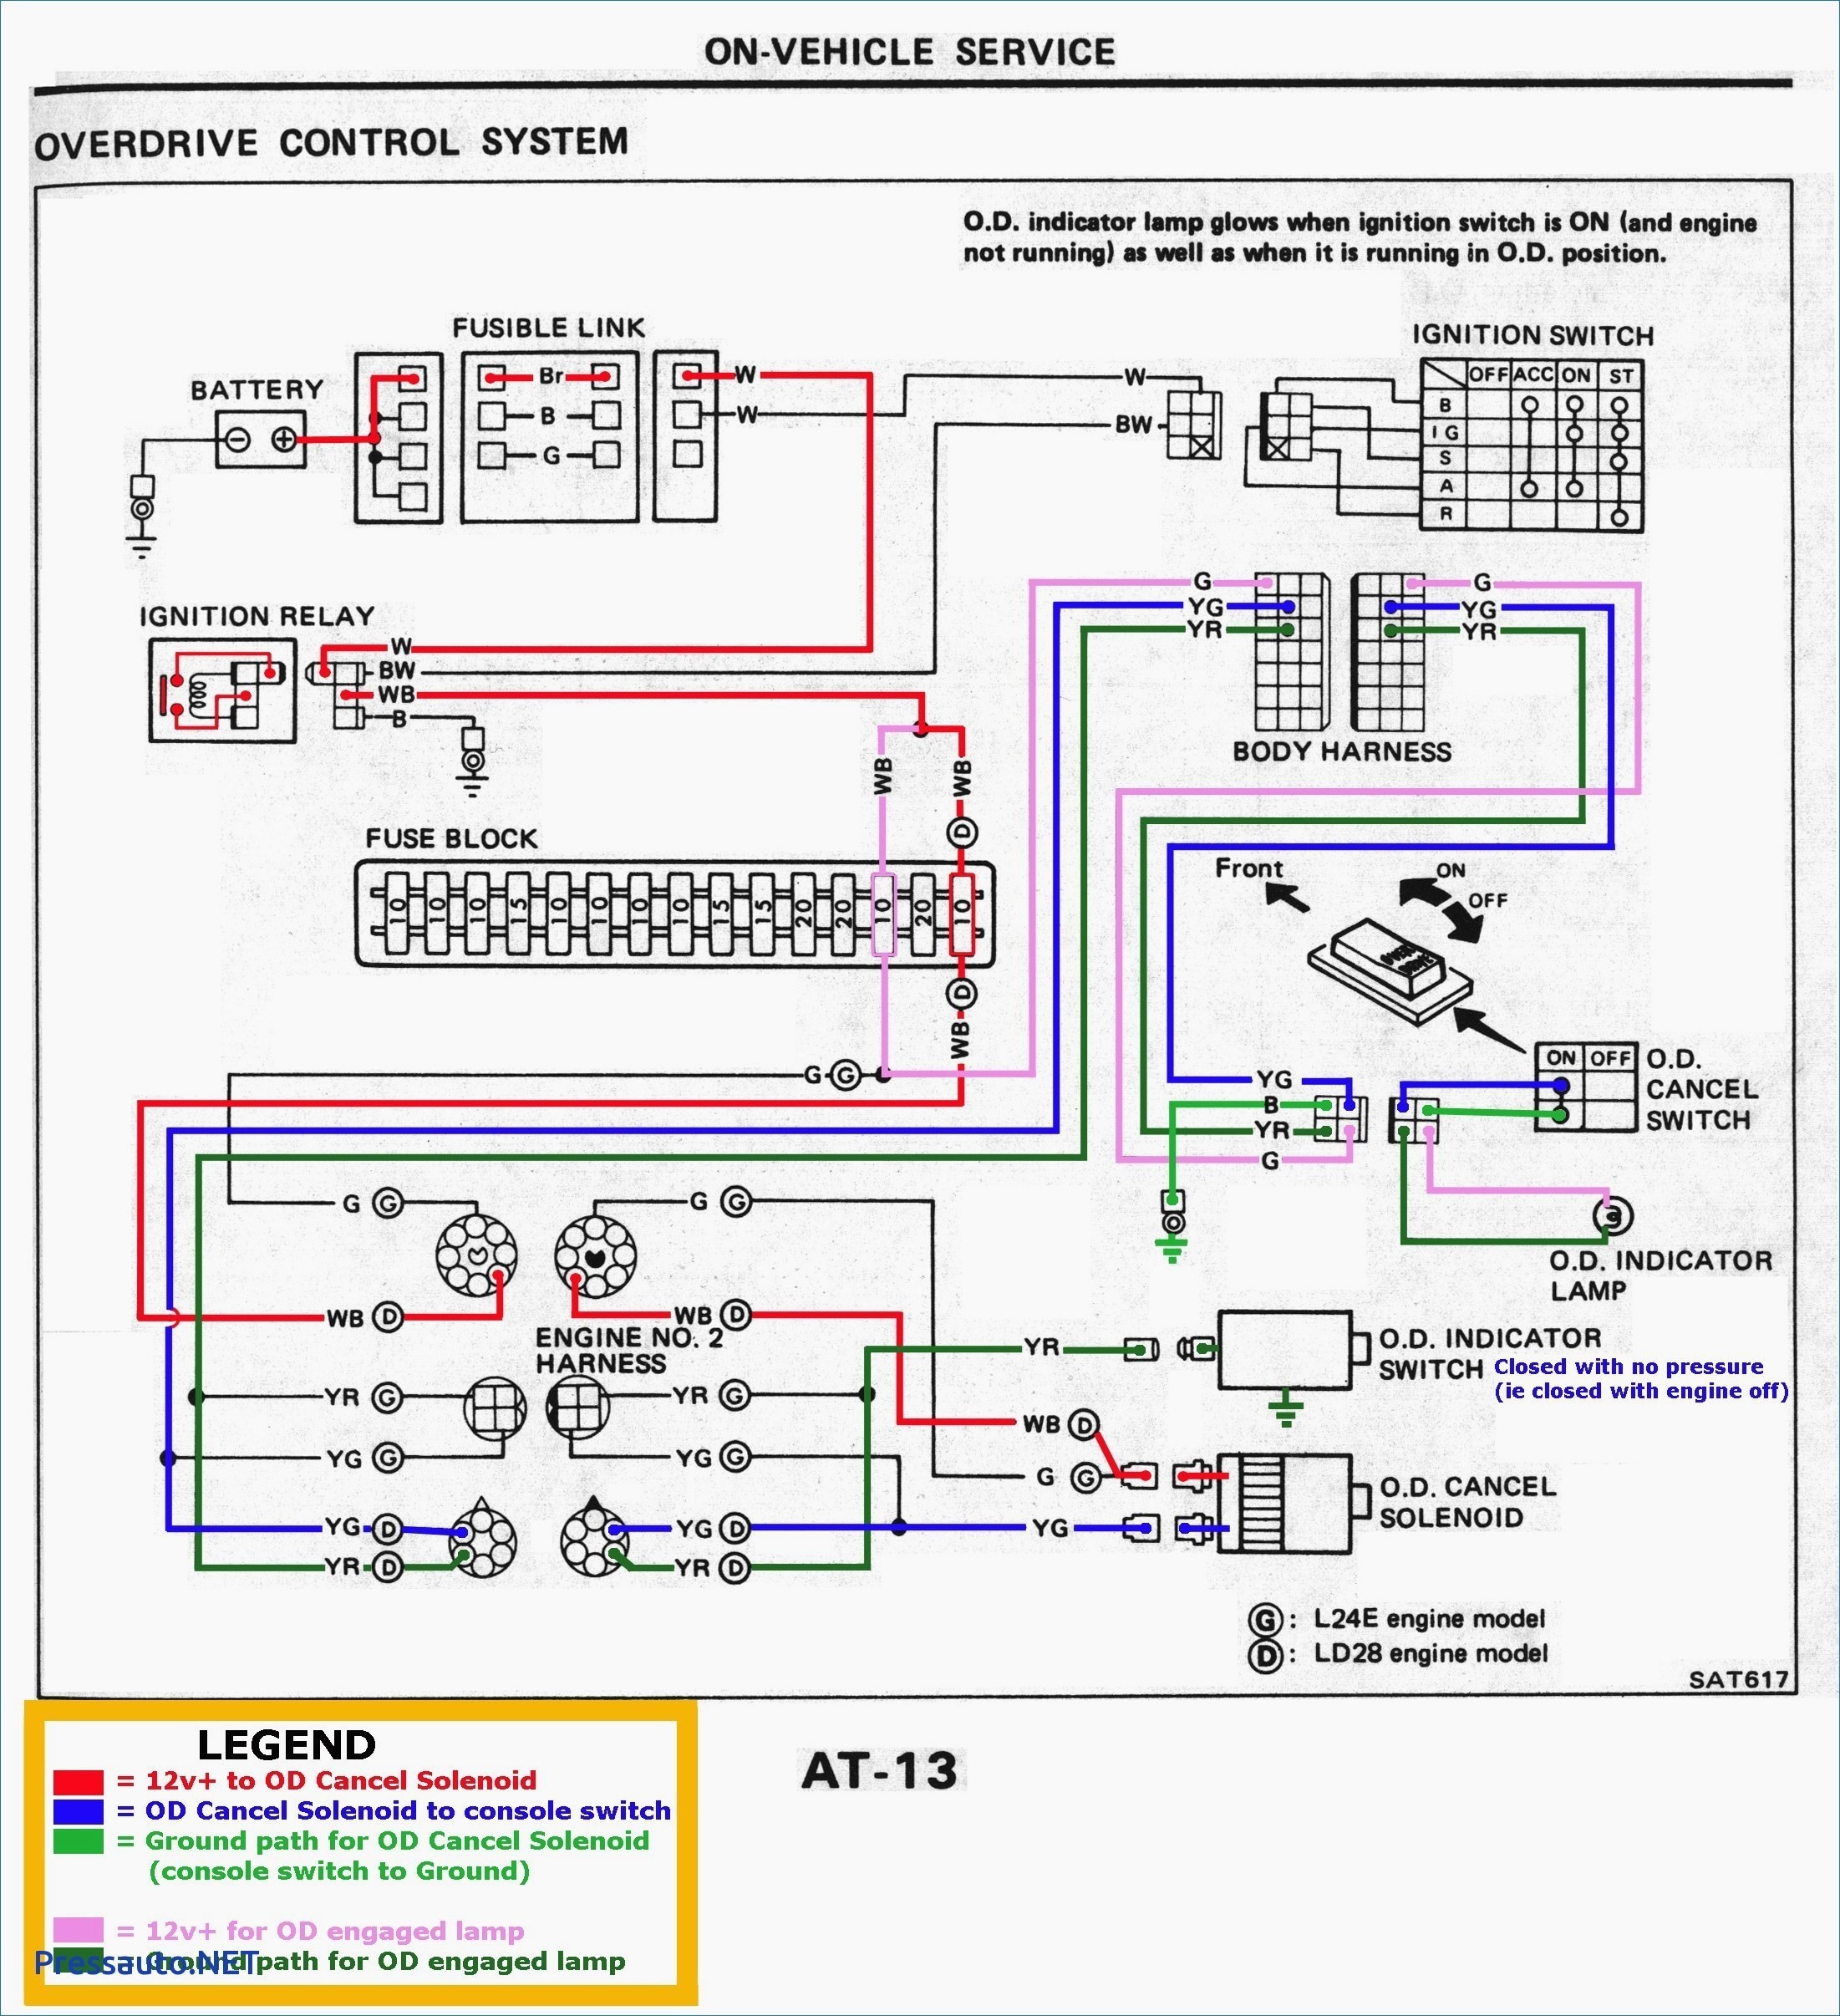 1998 ford Escort Engine Diagram Ccrm Wiring Diagram Schema Wiring Diagram Of 1998 ford Escort Engine Diagram